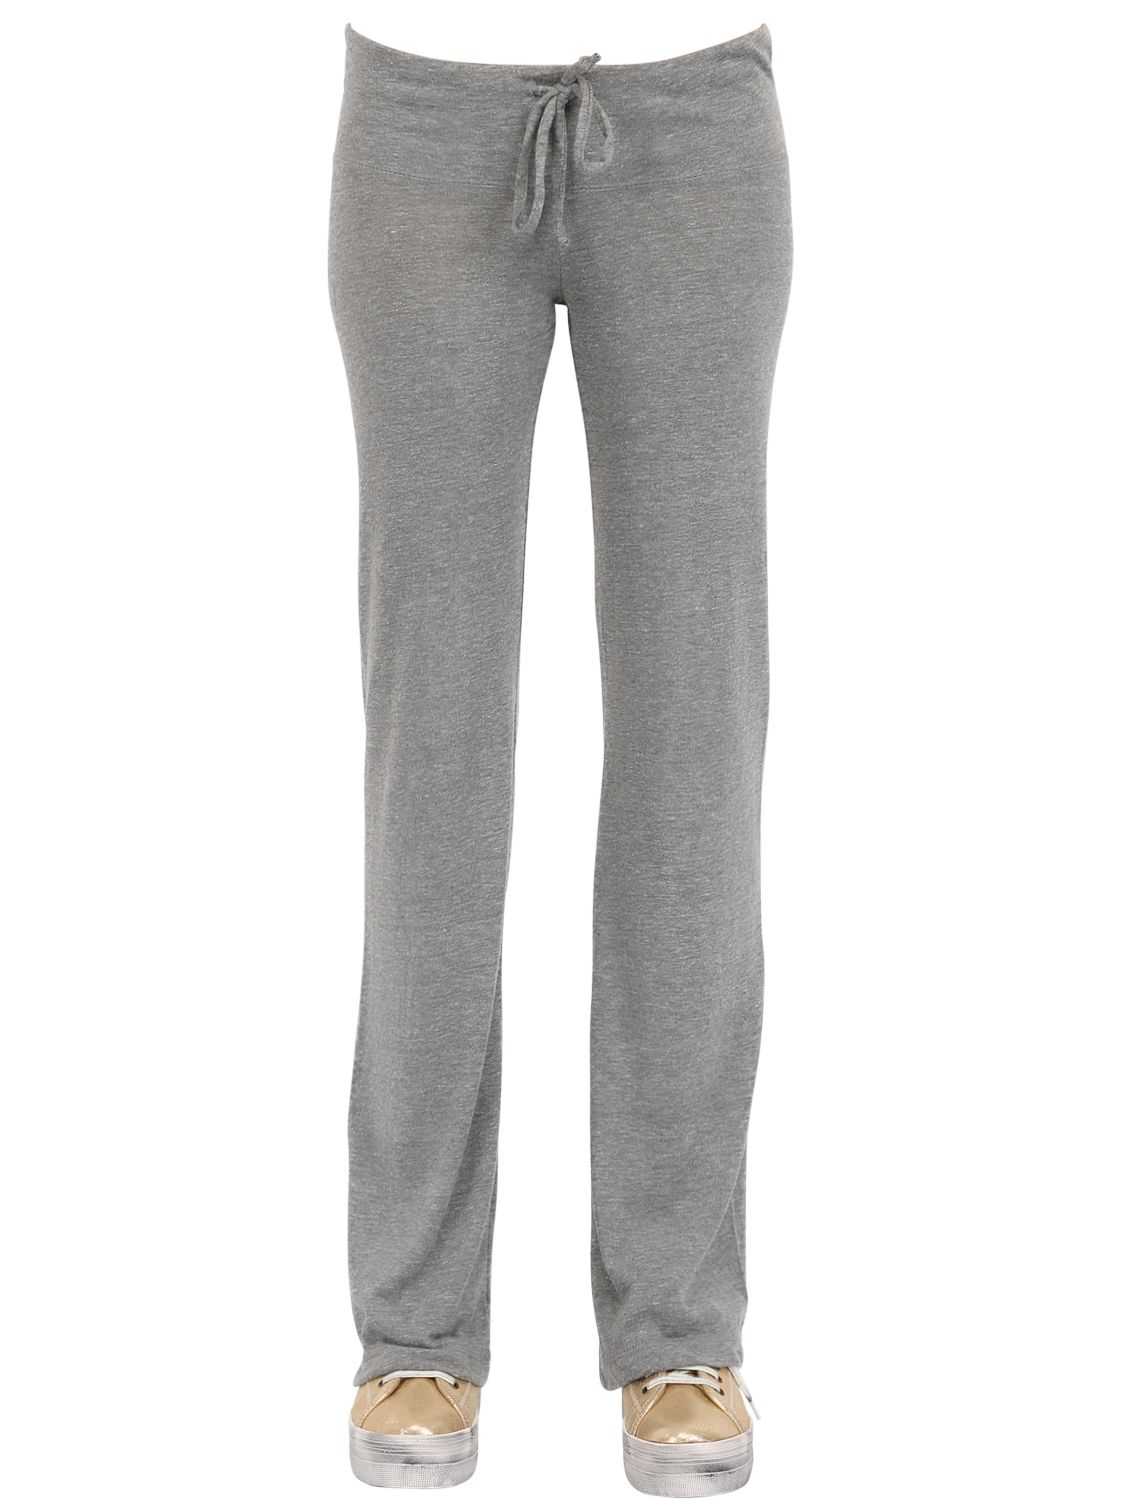 Lyst - Alternative Apparel Cotton Blend Jersey Yoga Pants in Gray for Men